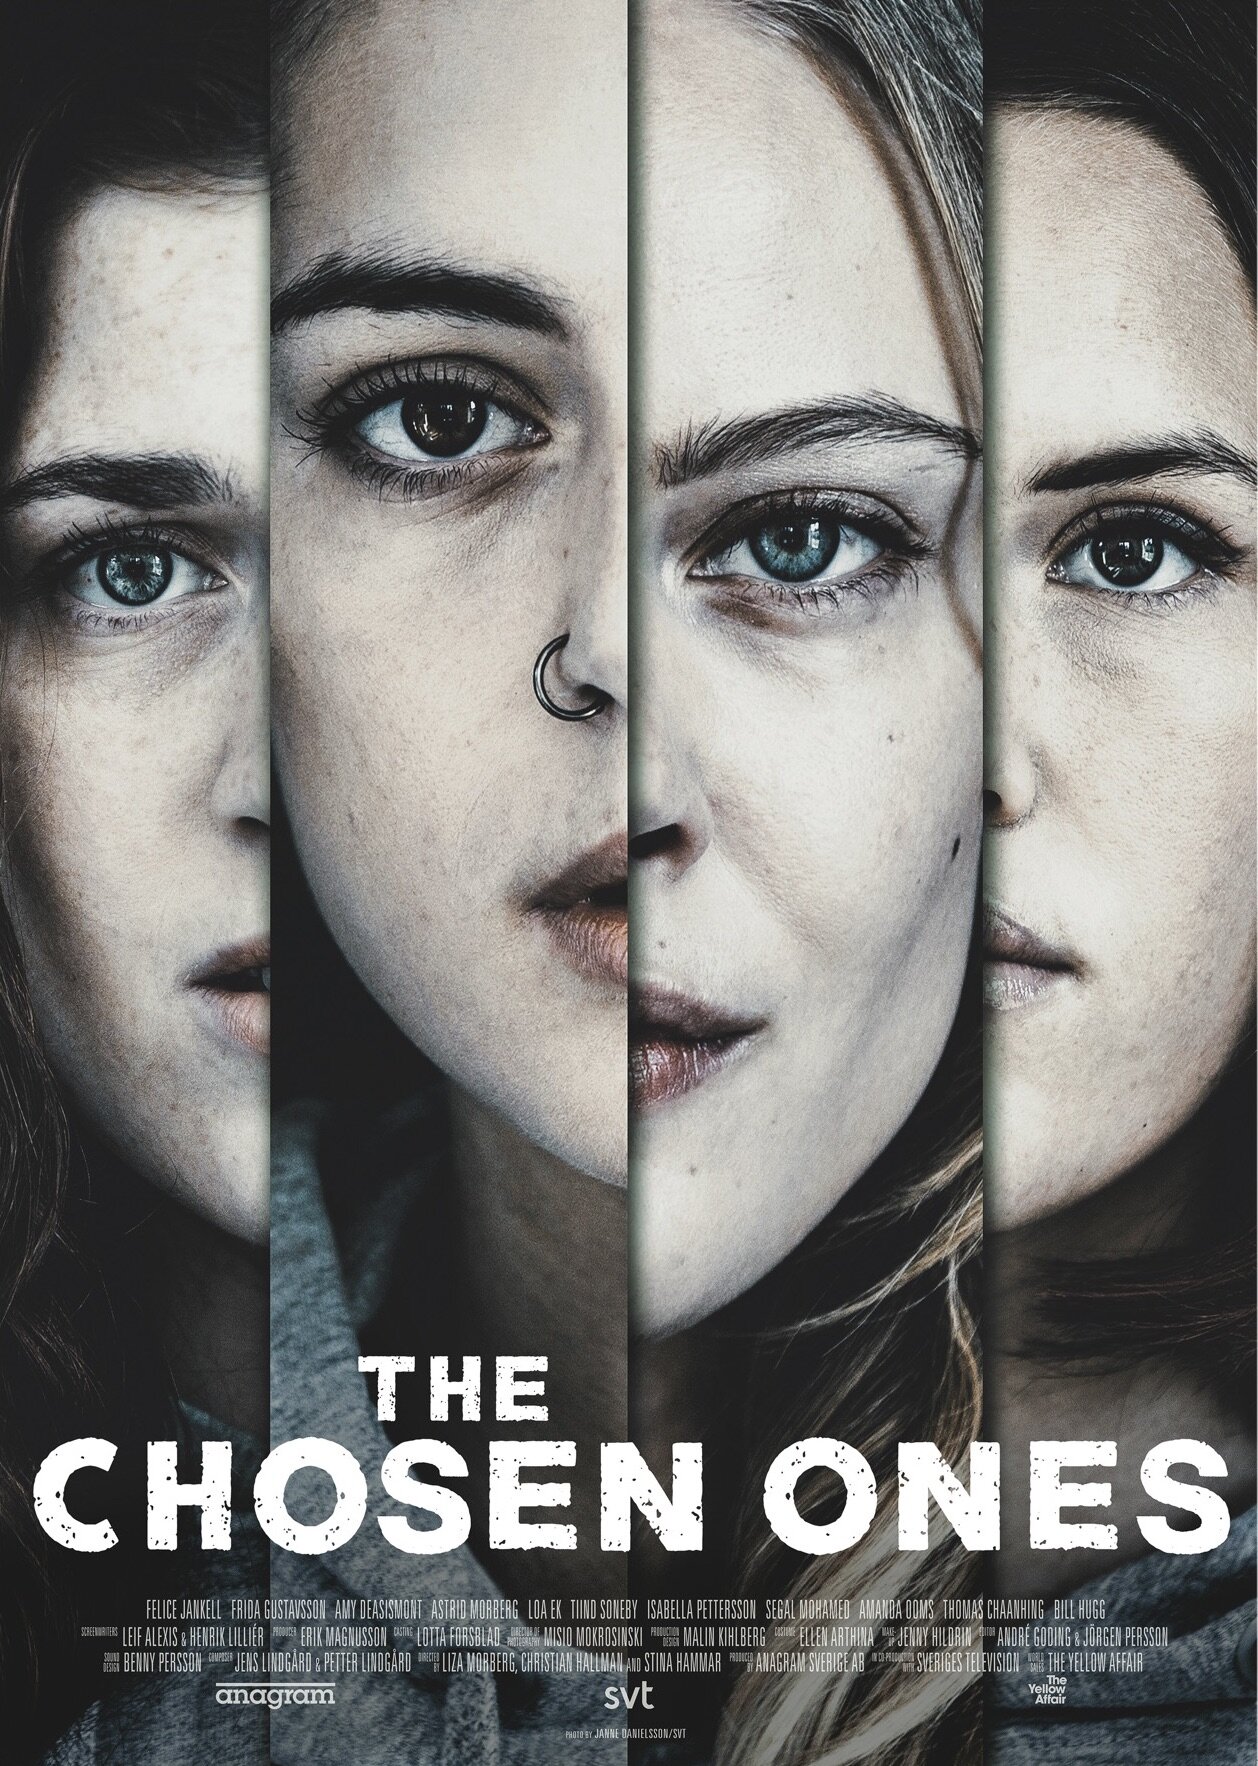 The Chosen Ones — THE YELLOW AFFAIR